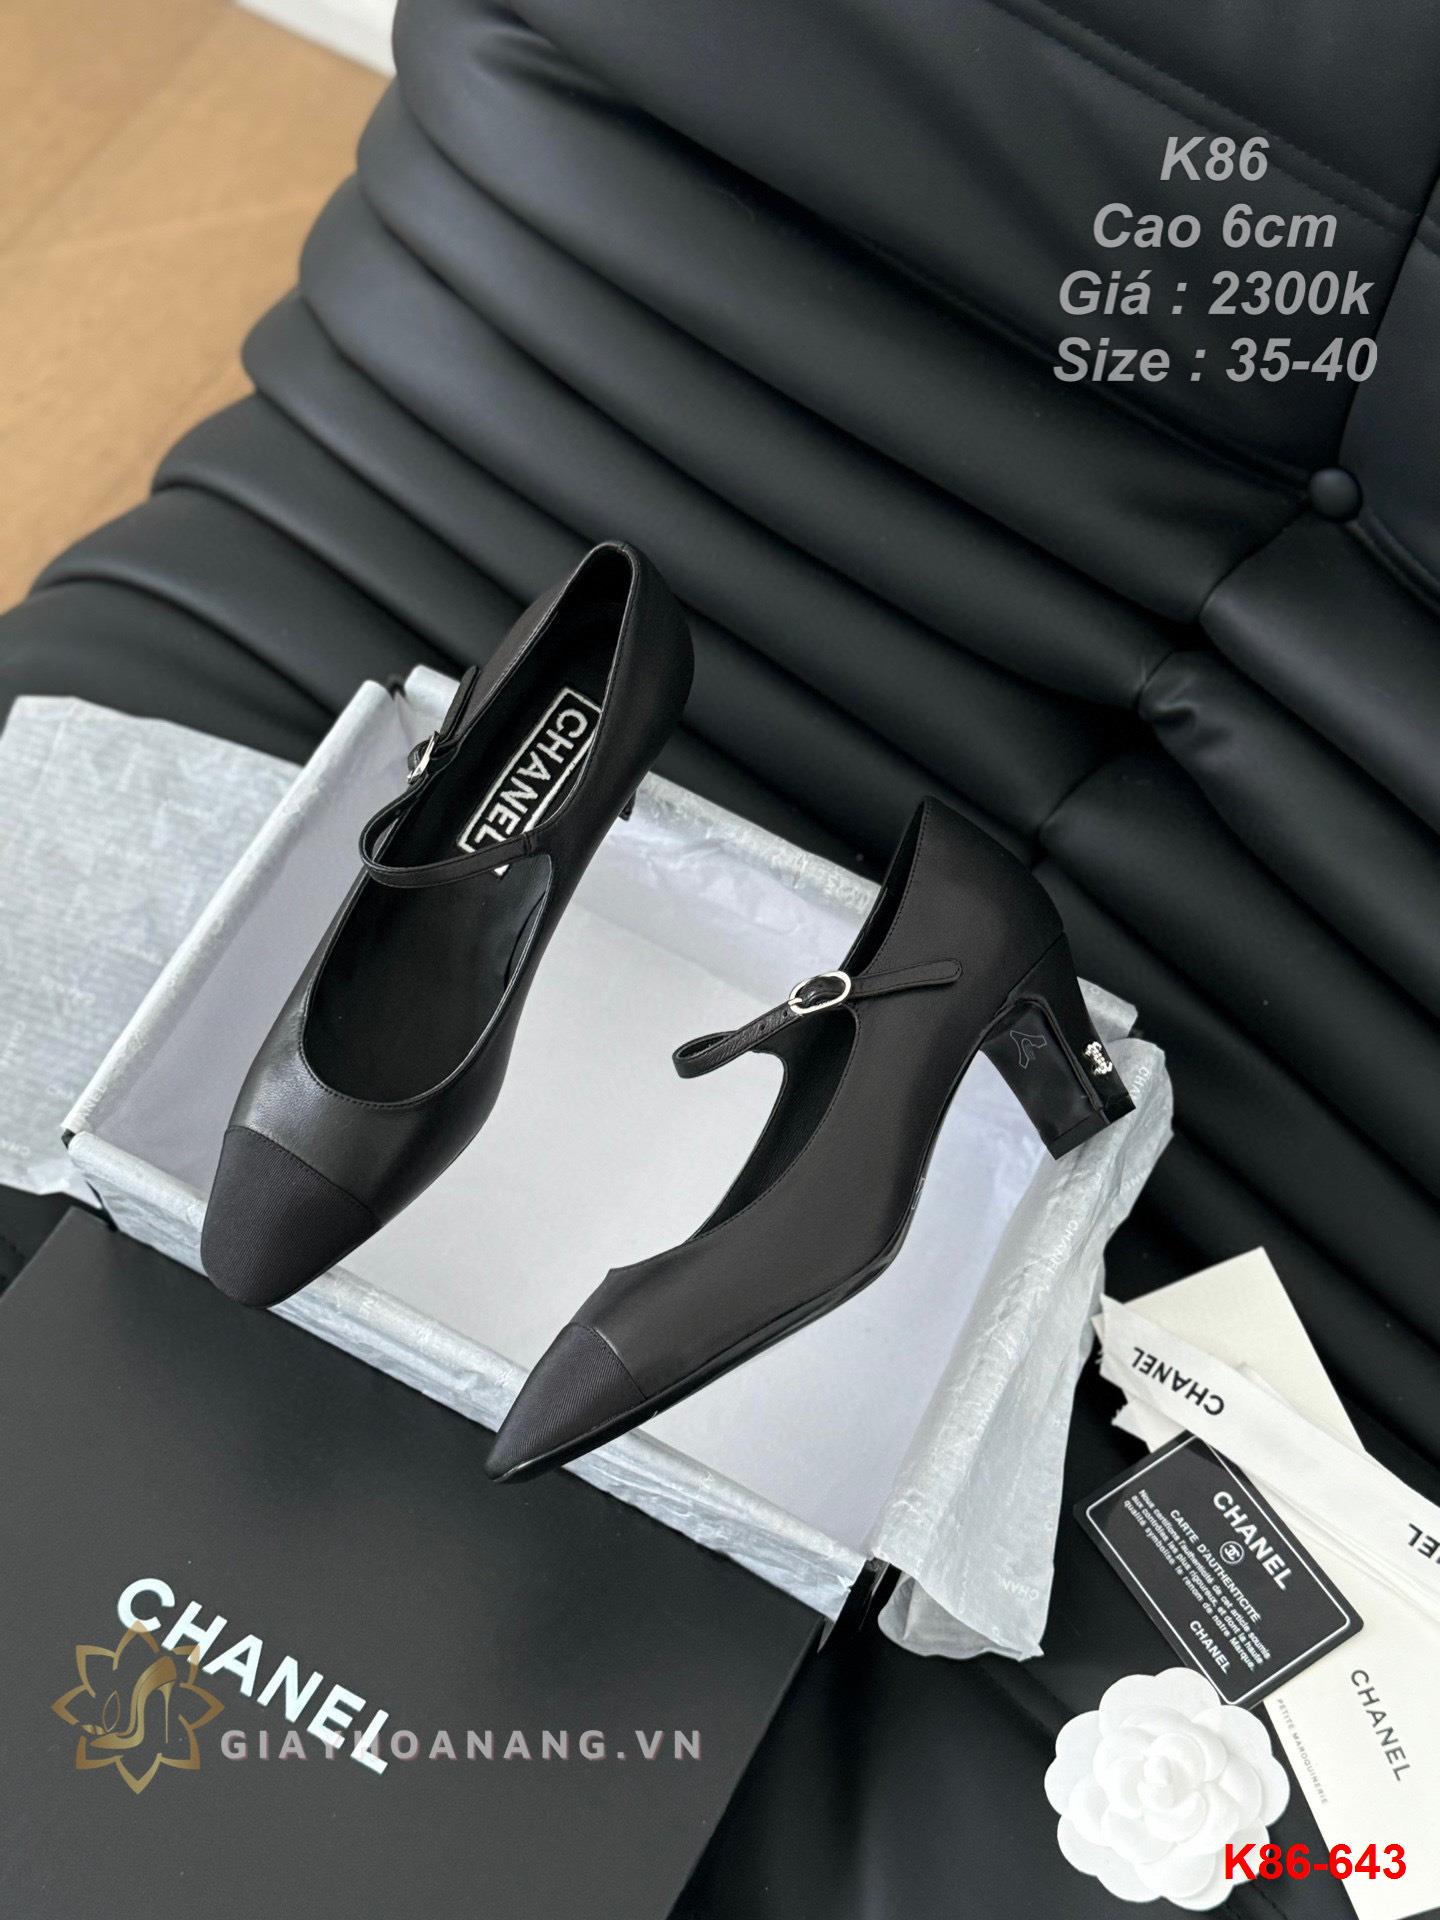 K86-643 Chanel giày cao gót 6cm siêu cấp